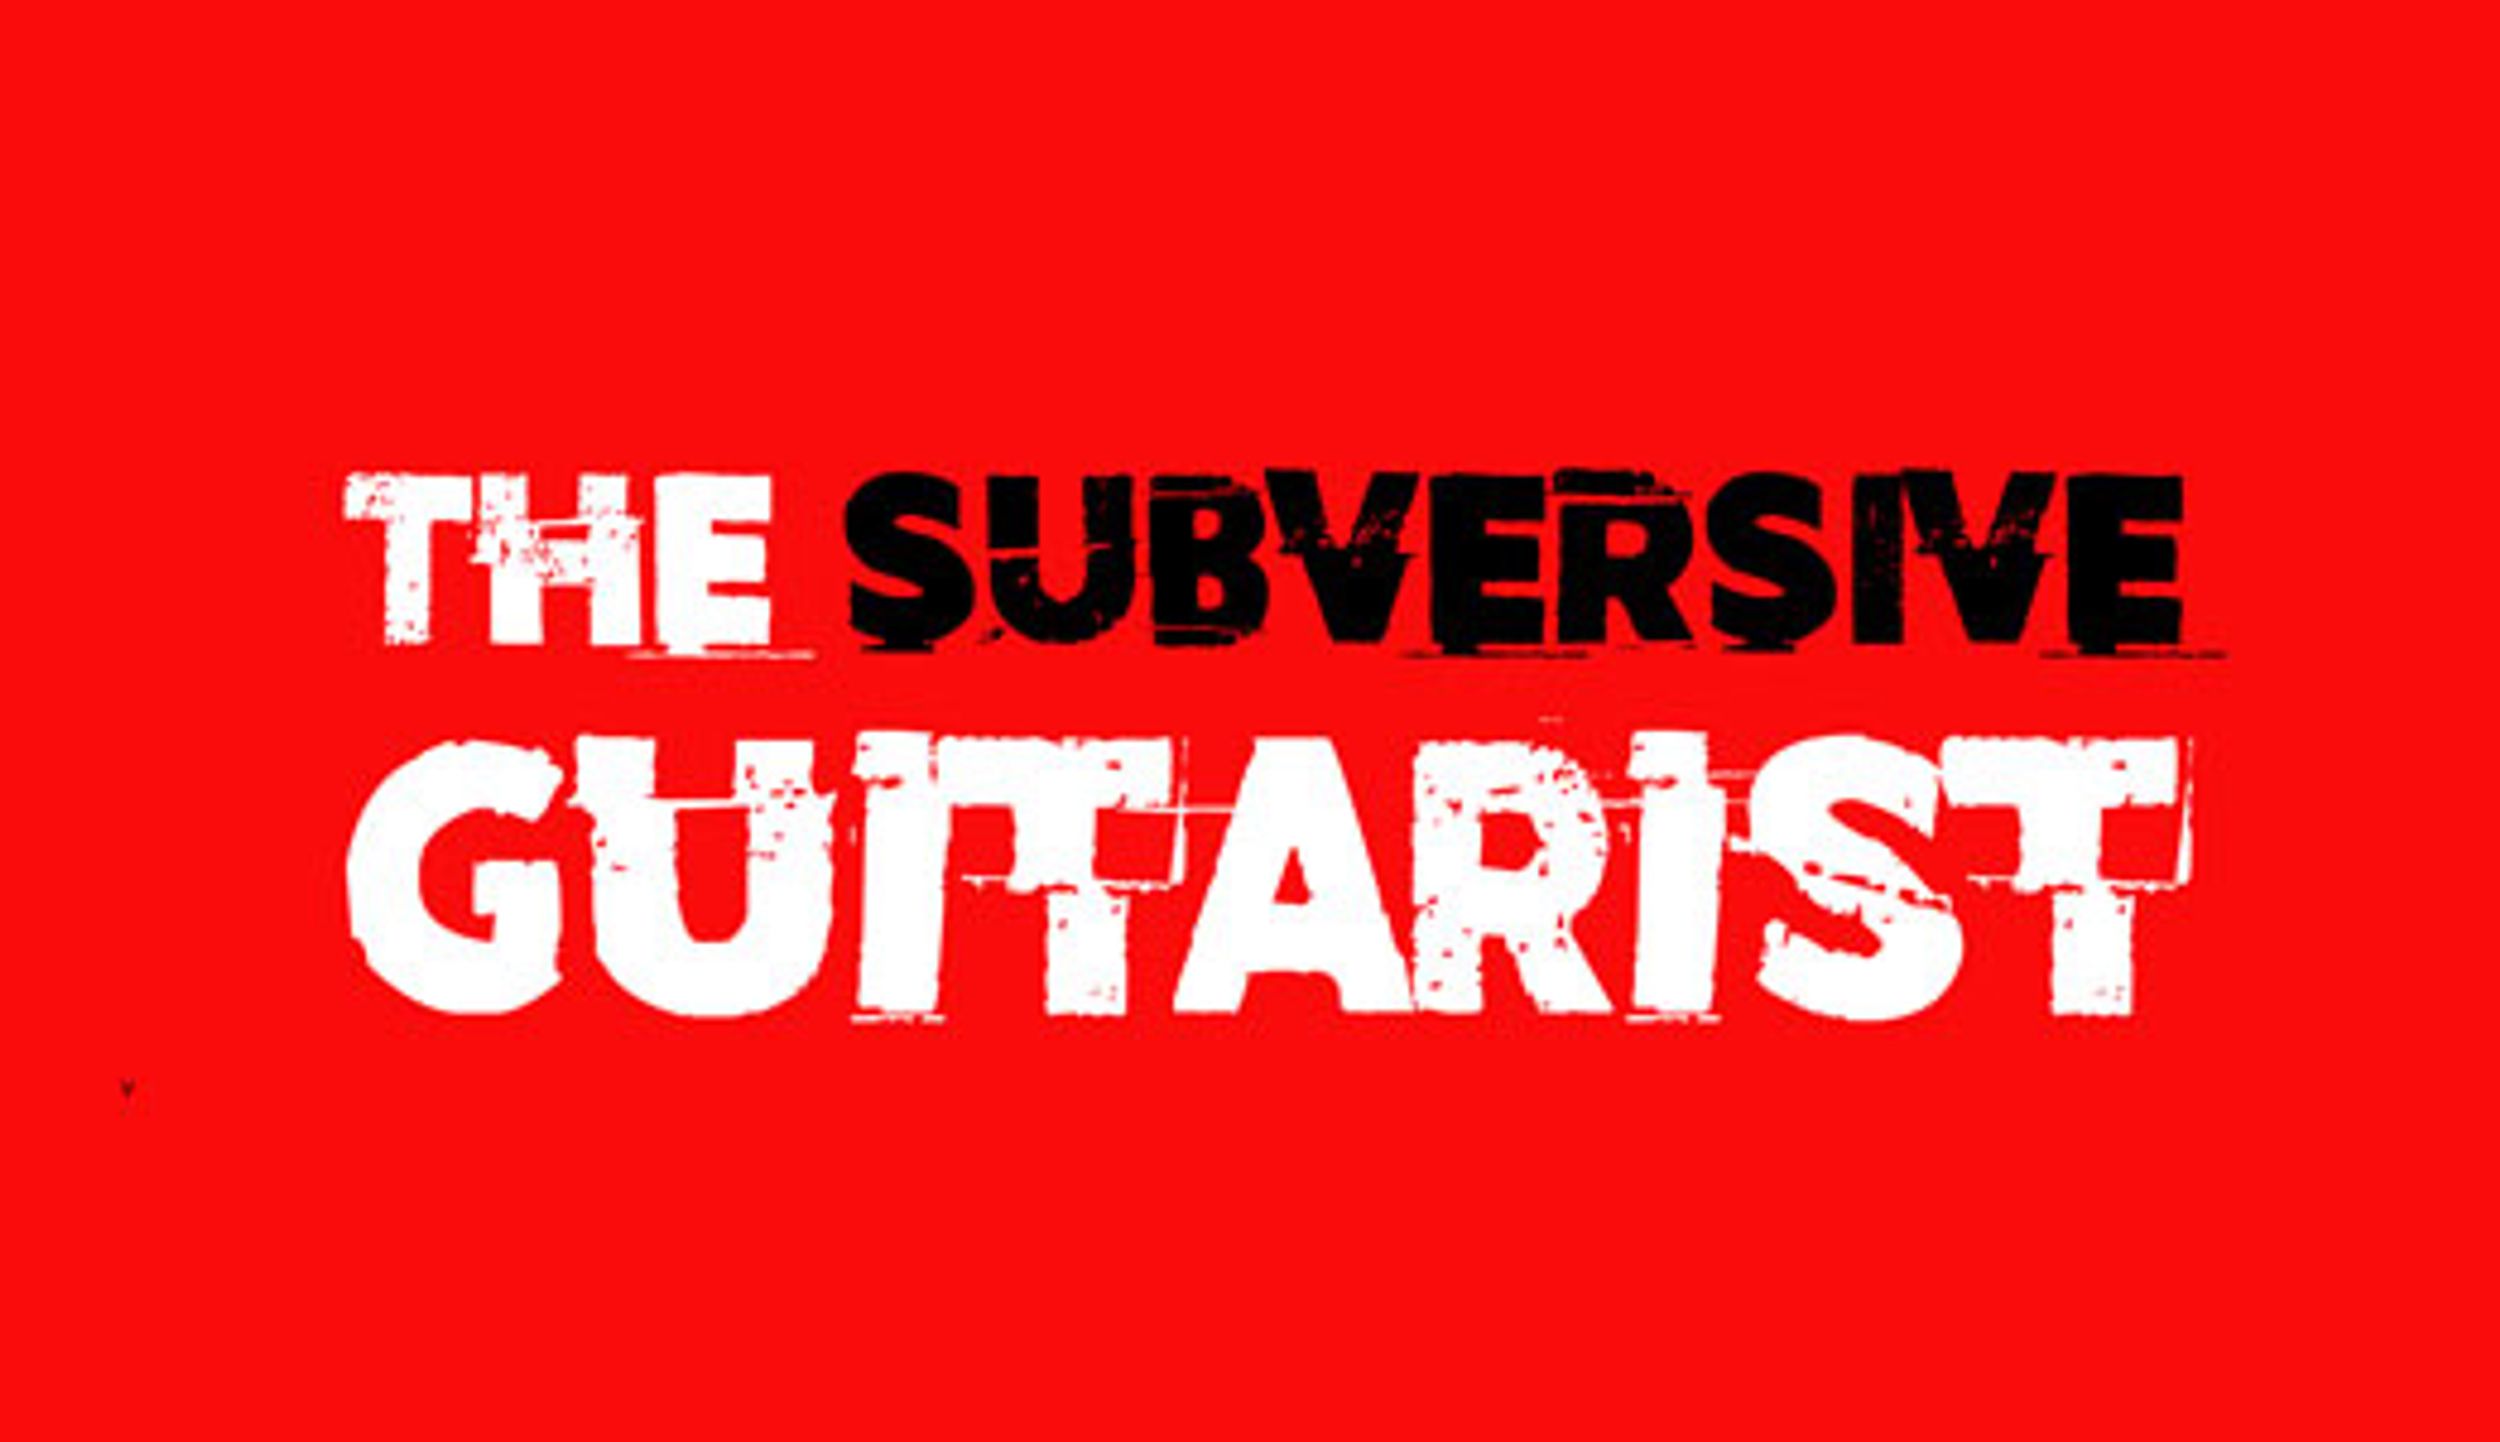 Joe Gore's The Subversive Guitarist: Trapped in a Box!